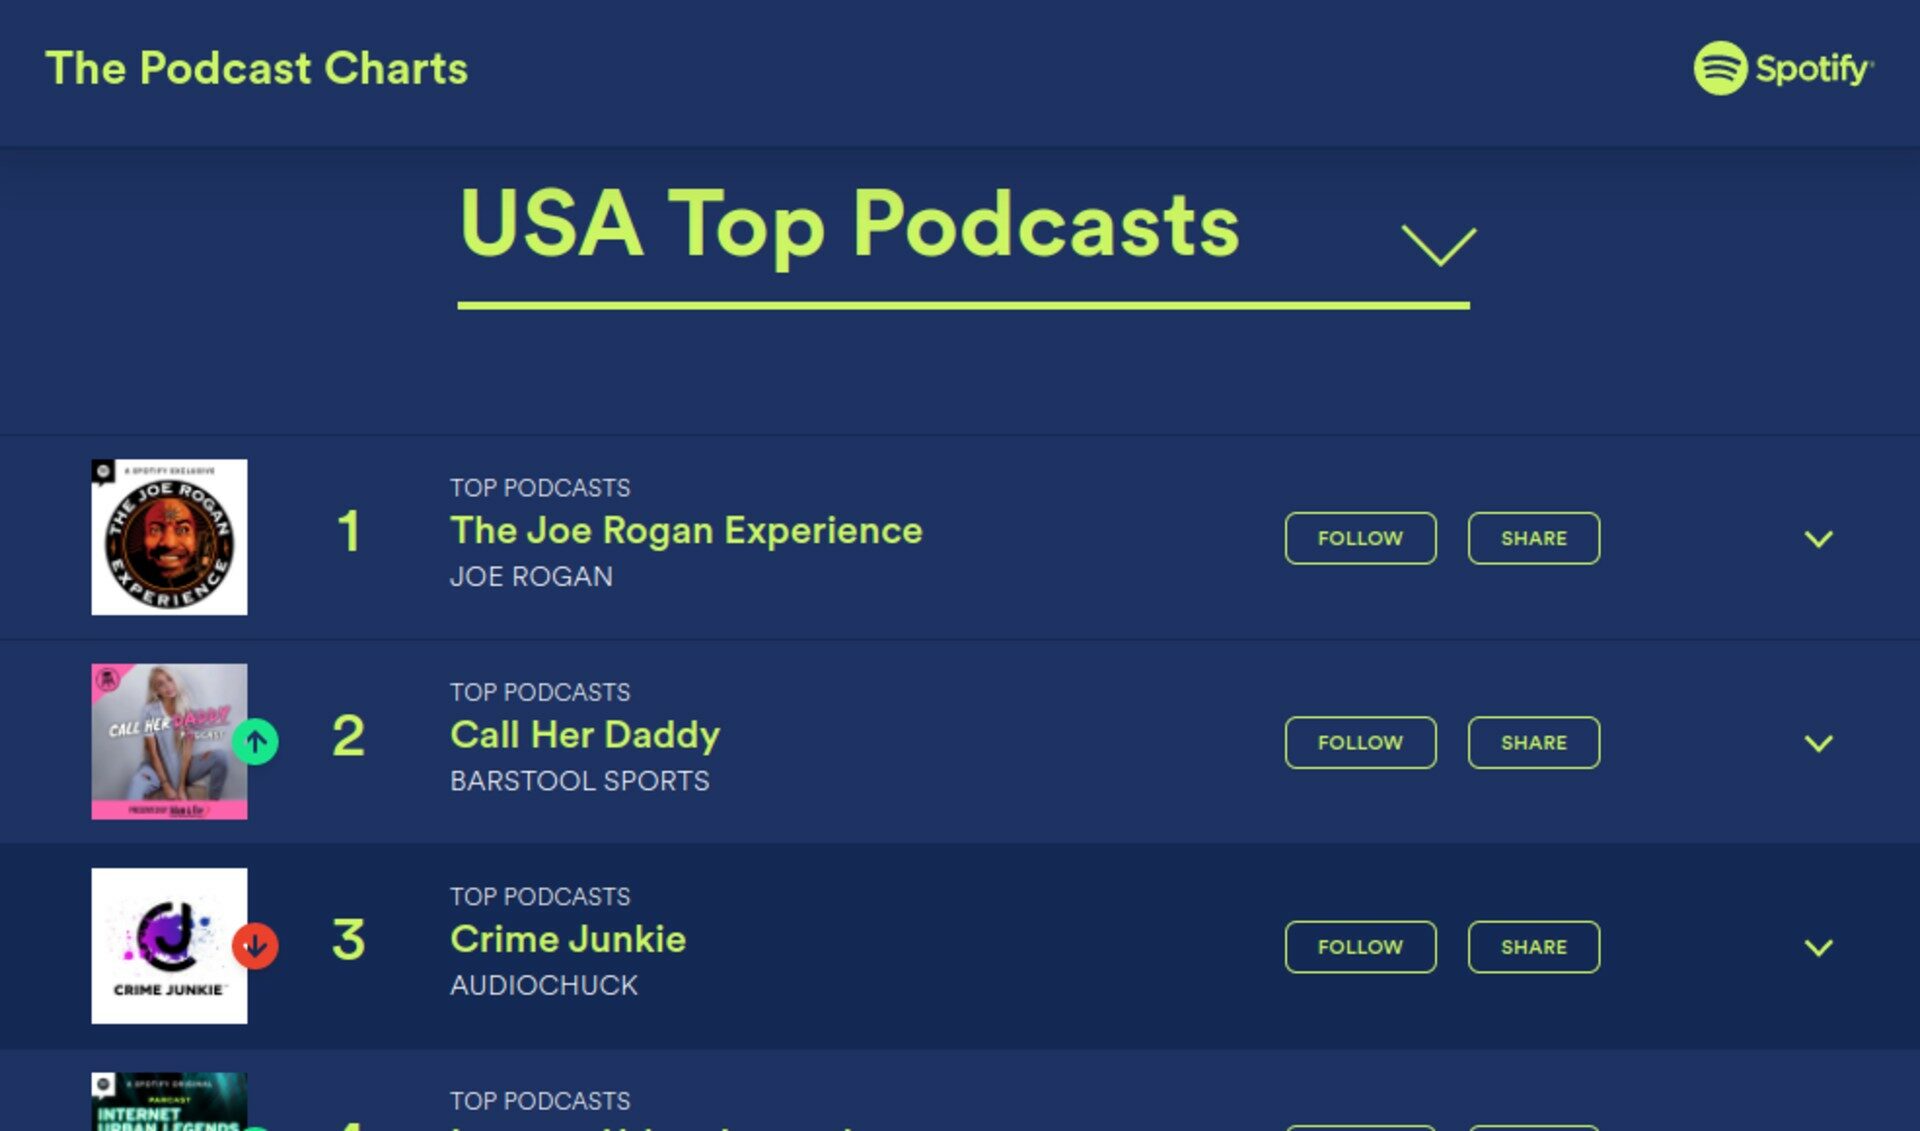 Podcast Charts